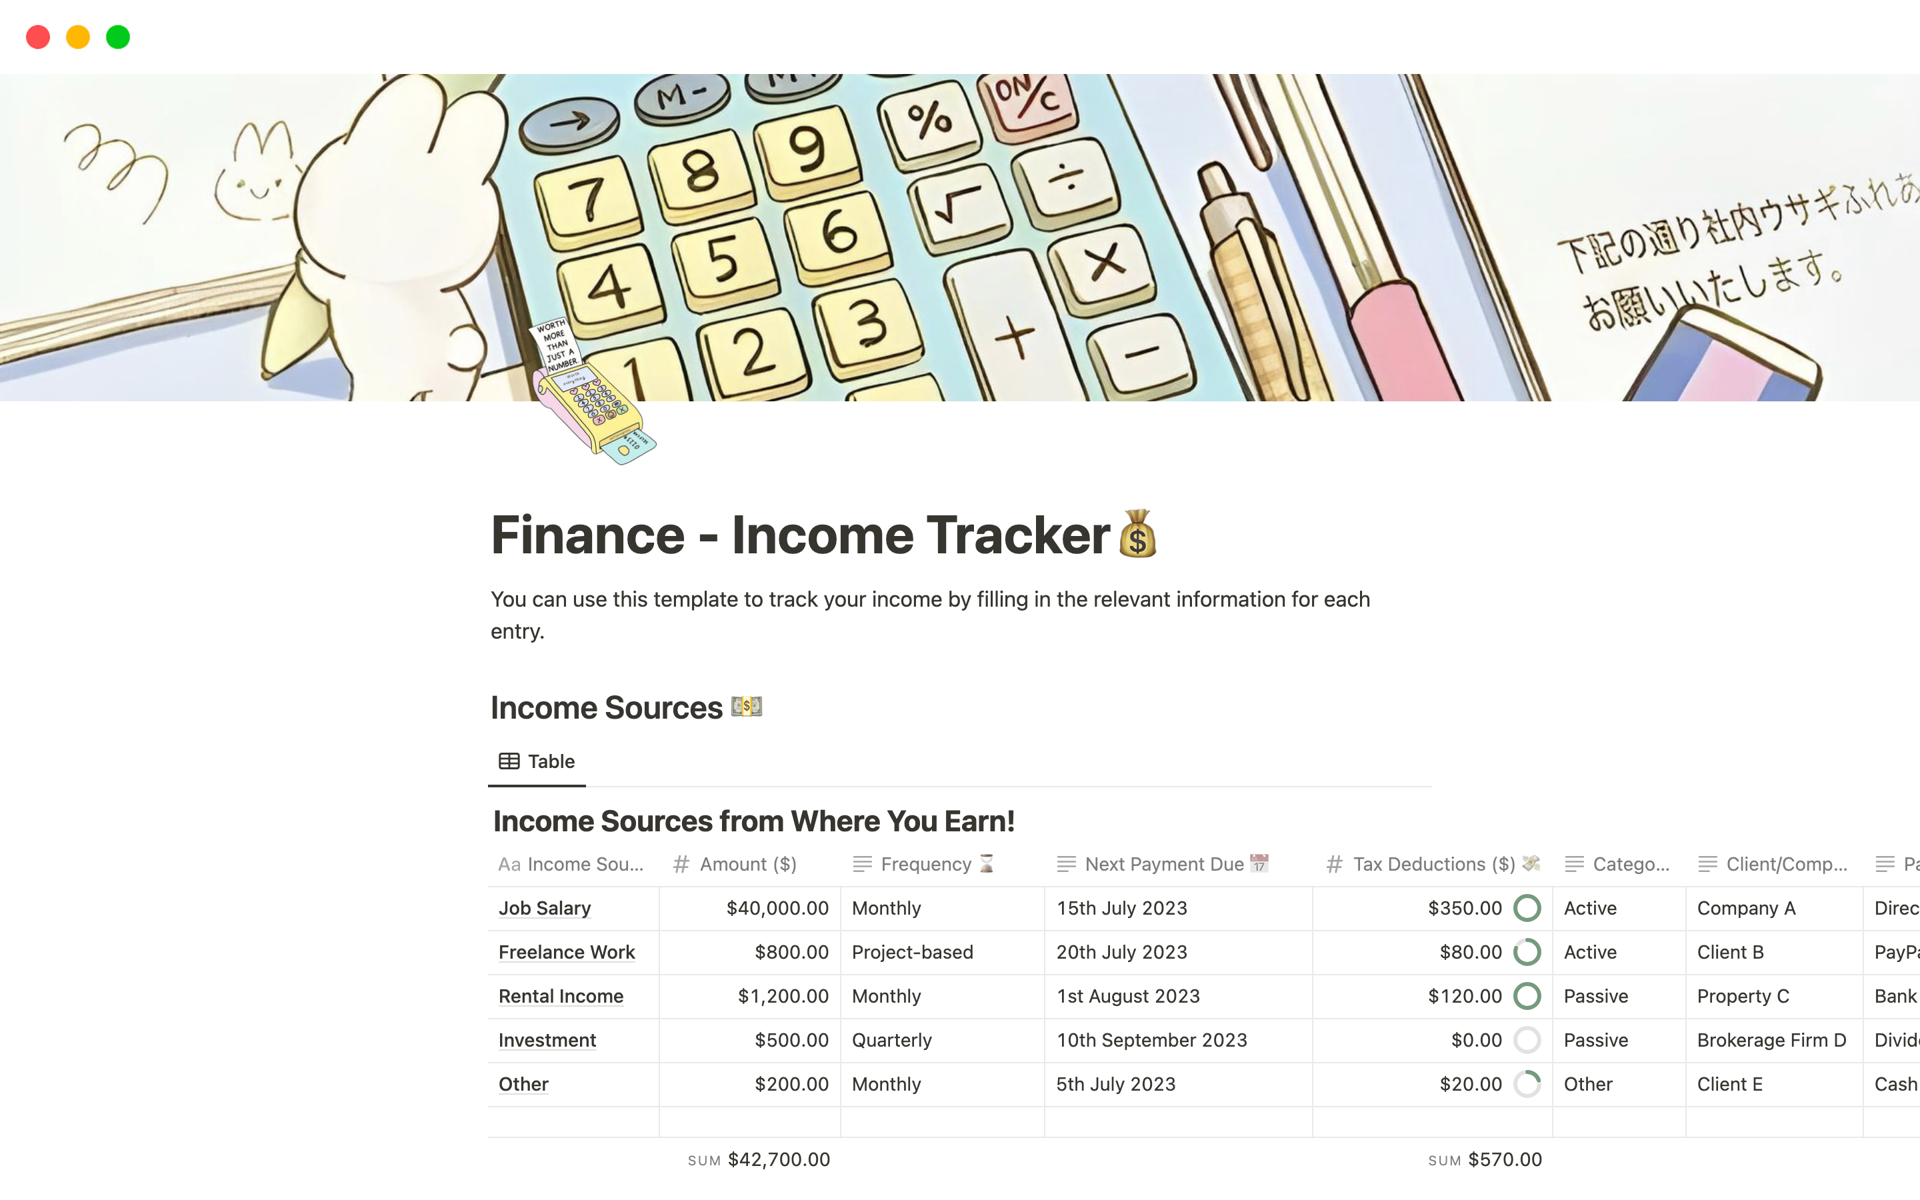 Aperçu du modèle de Finance - Income Tracker